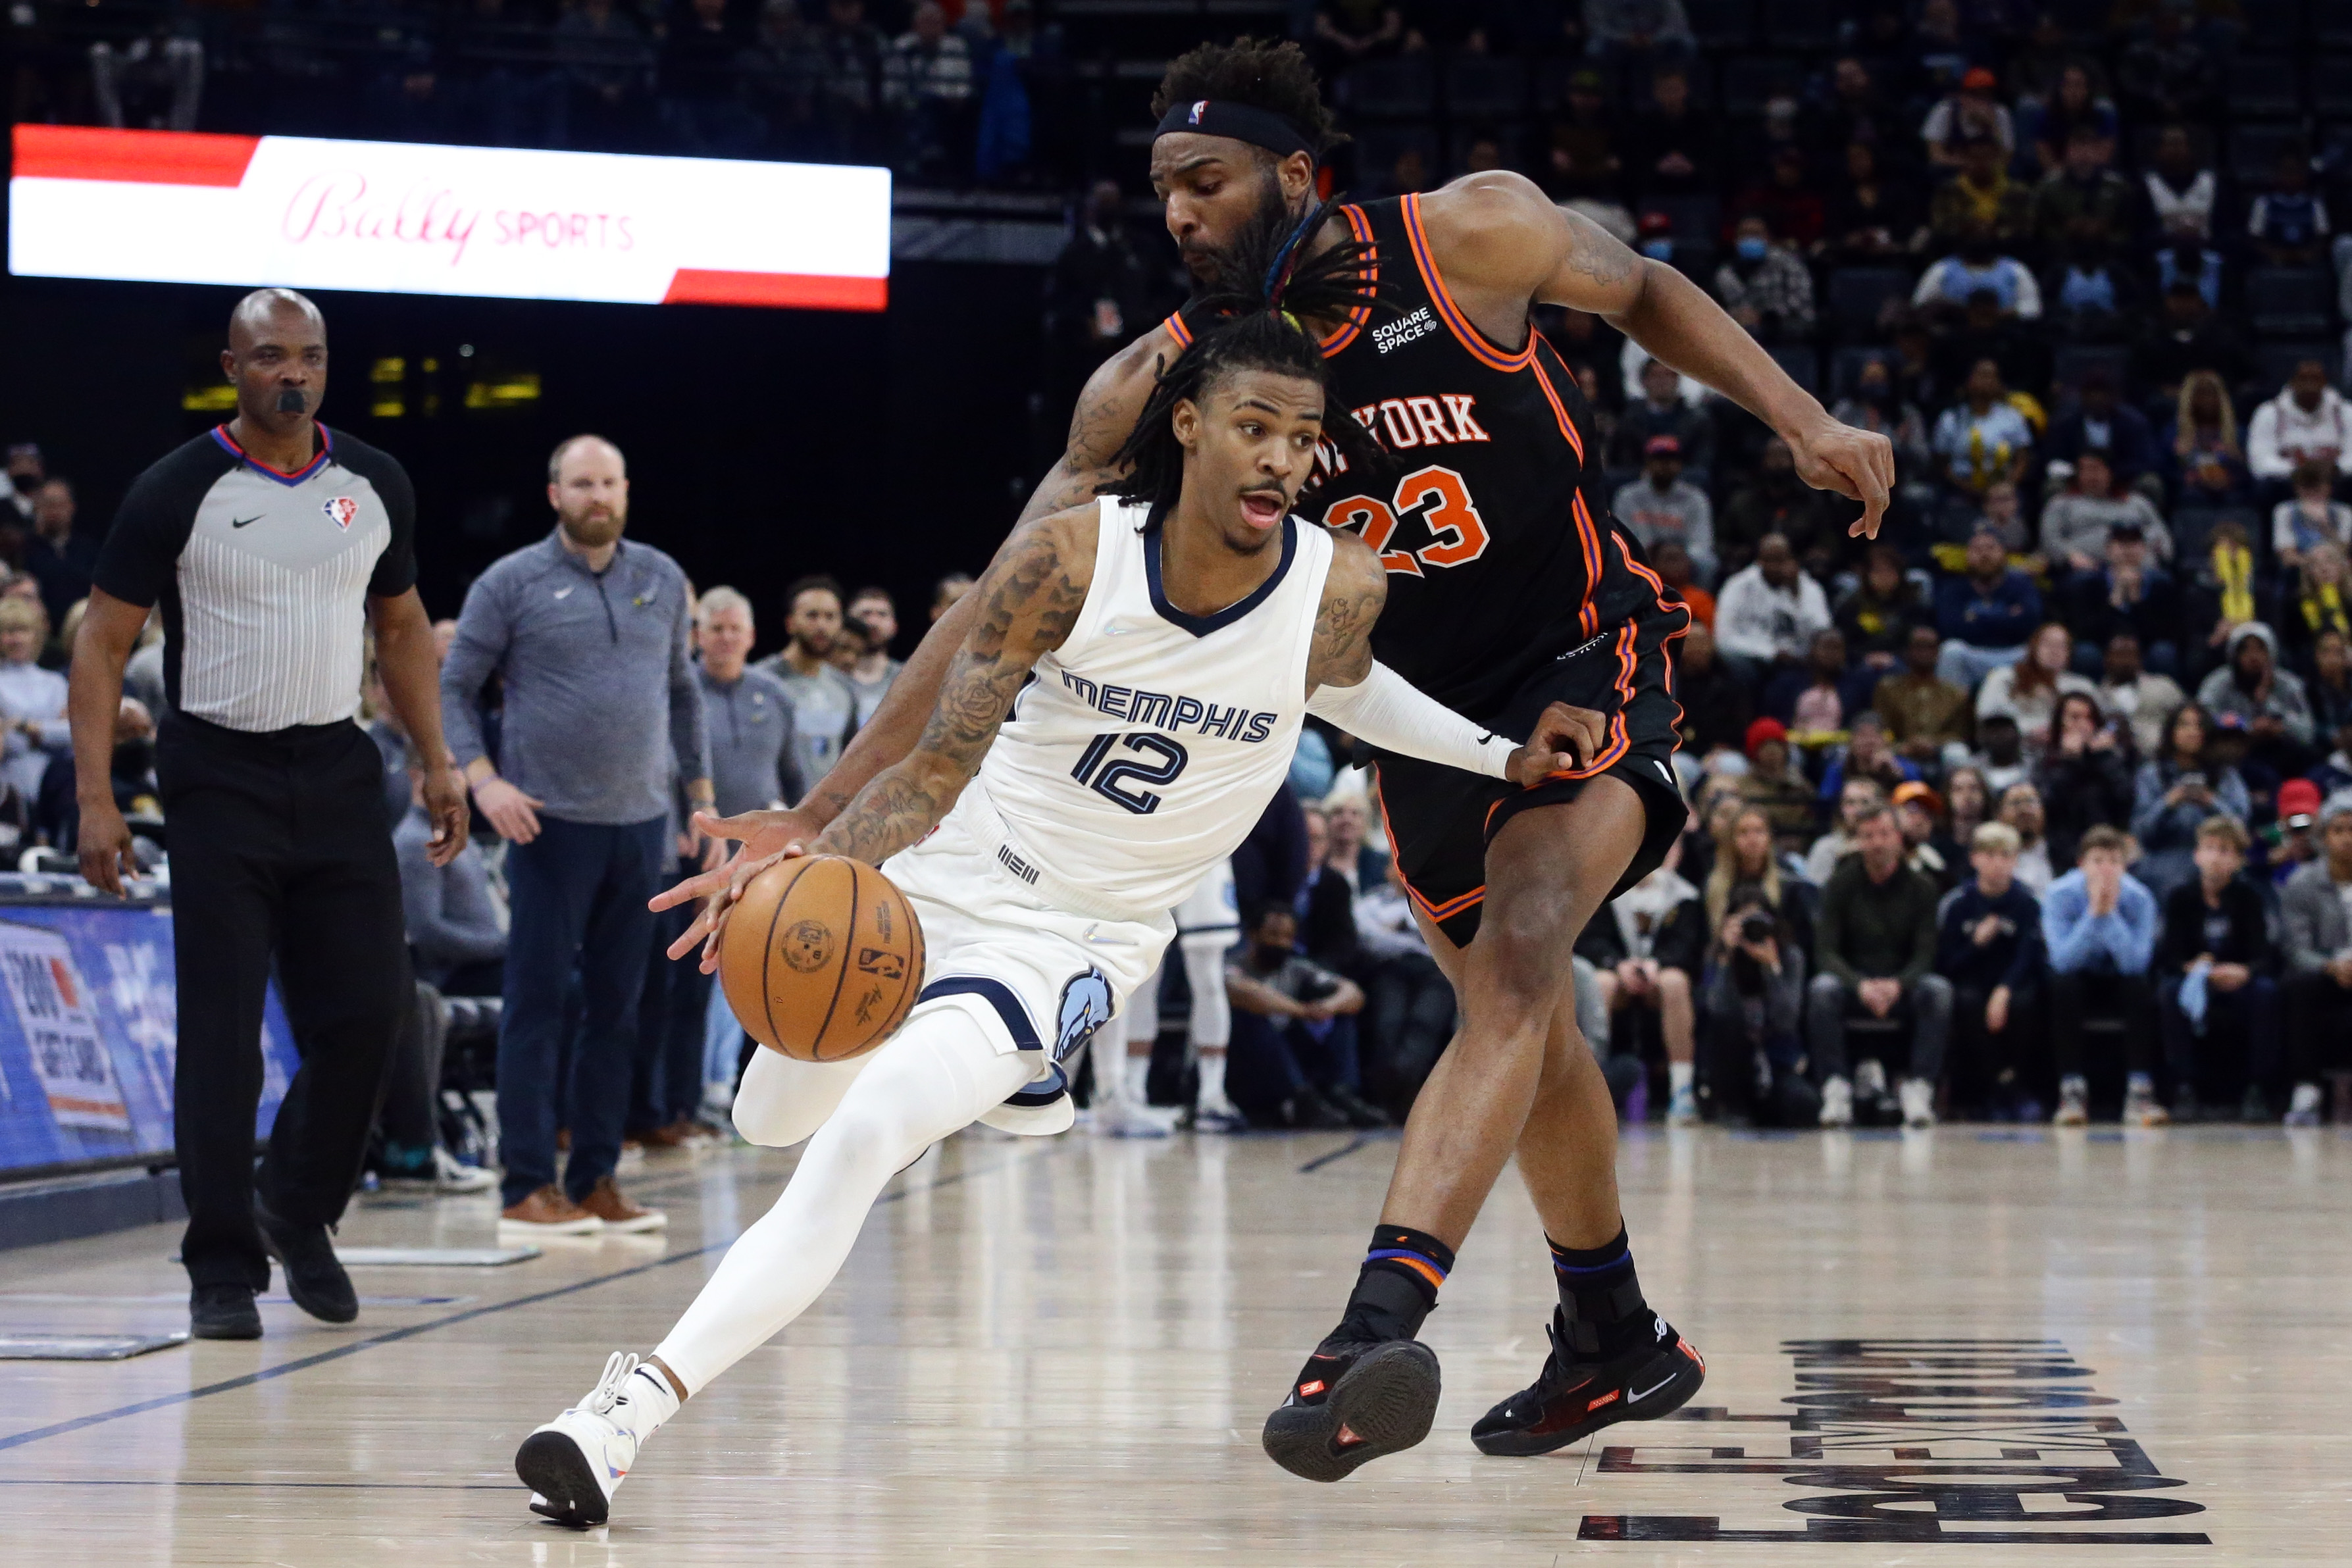 NBA: New York Knicks at Memphis Grizzlies